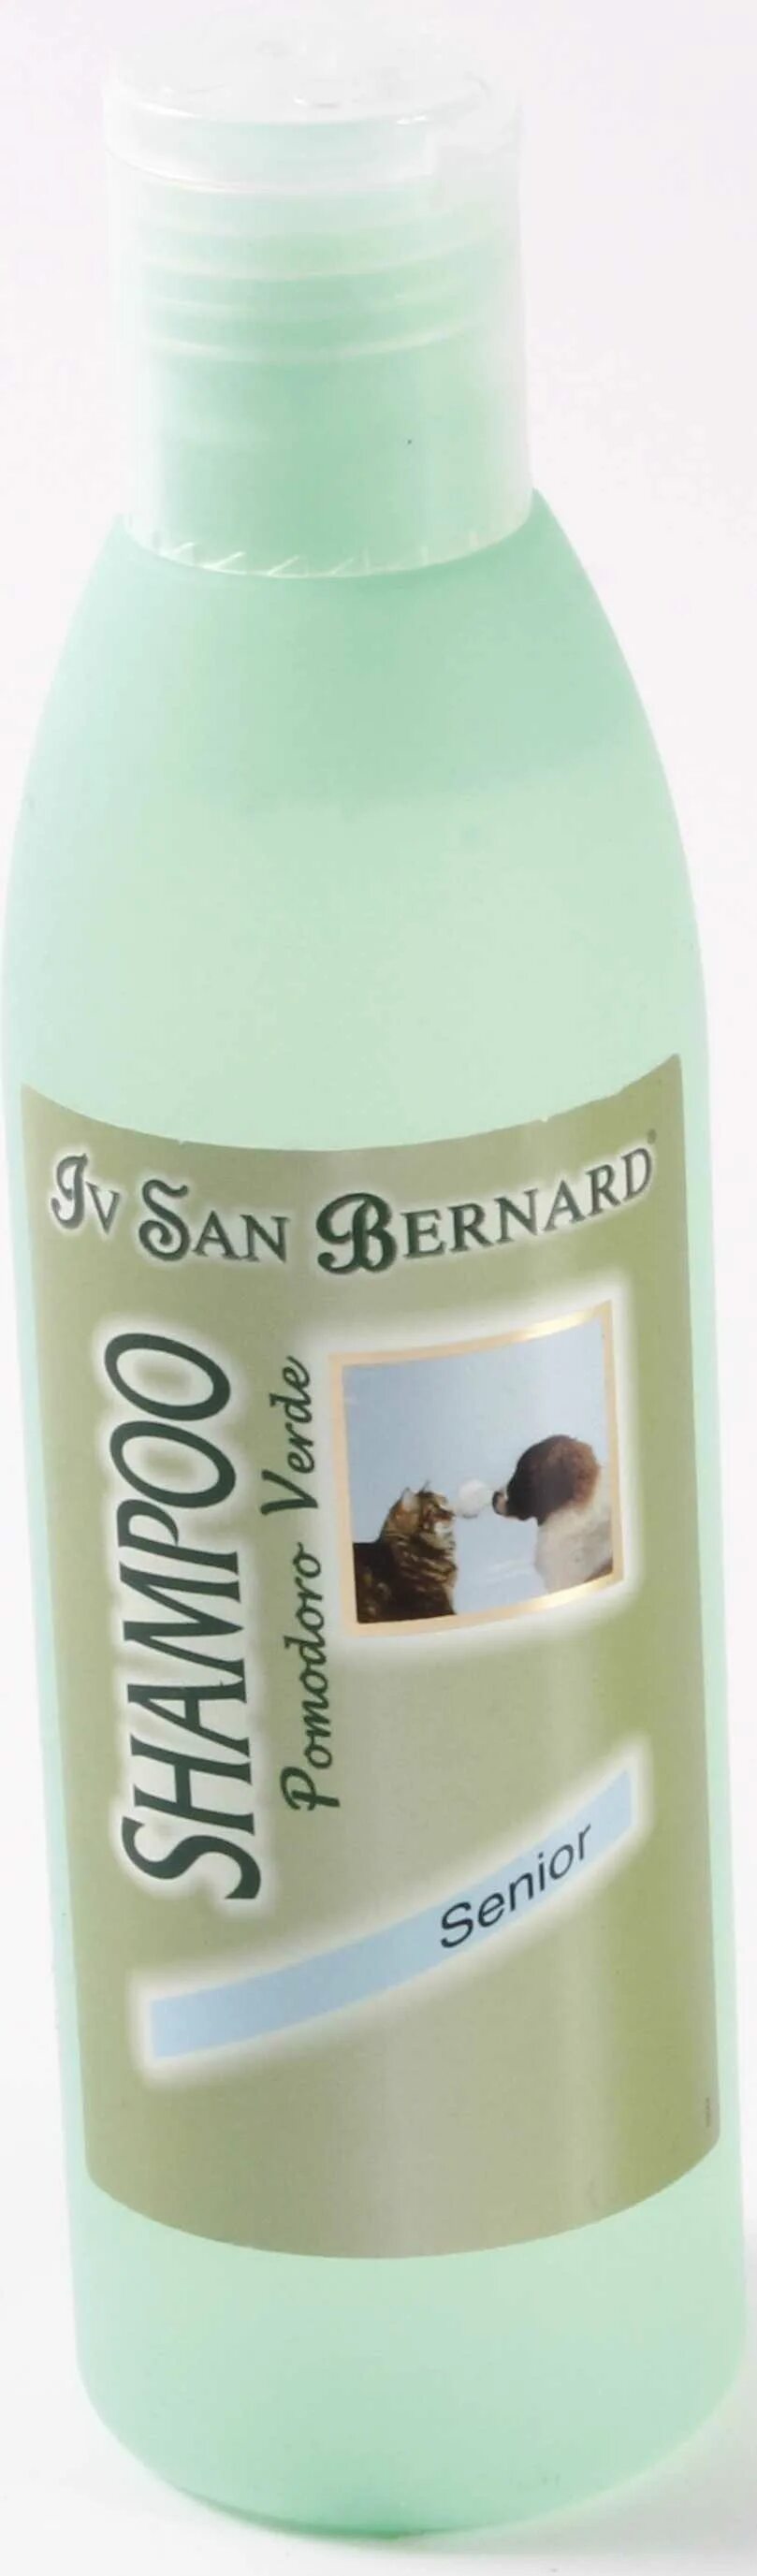 San шампунь. Сан Бернард шампунь для собак. IV San Bernard шампунь. IV San Bernard шампунь для собак. Шампунь Ив сен Бернард для собак.